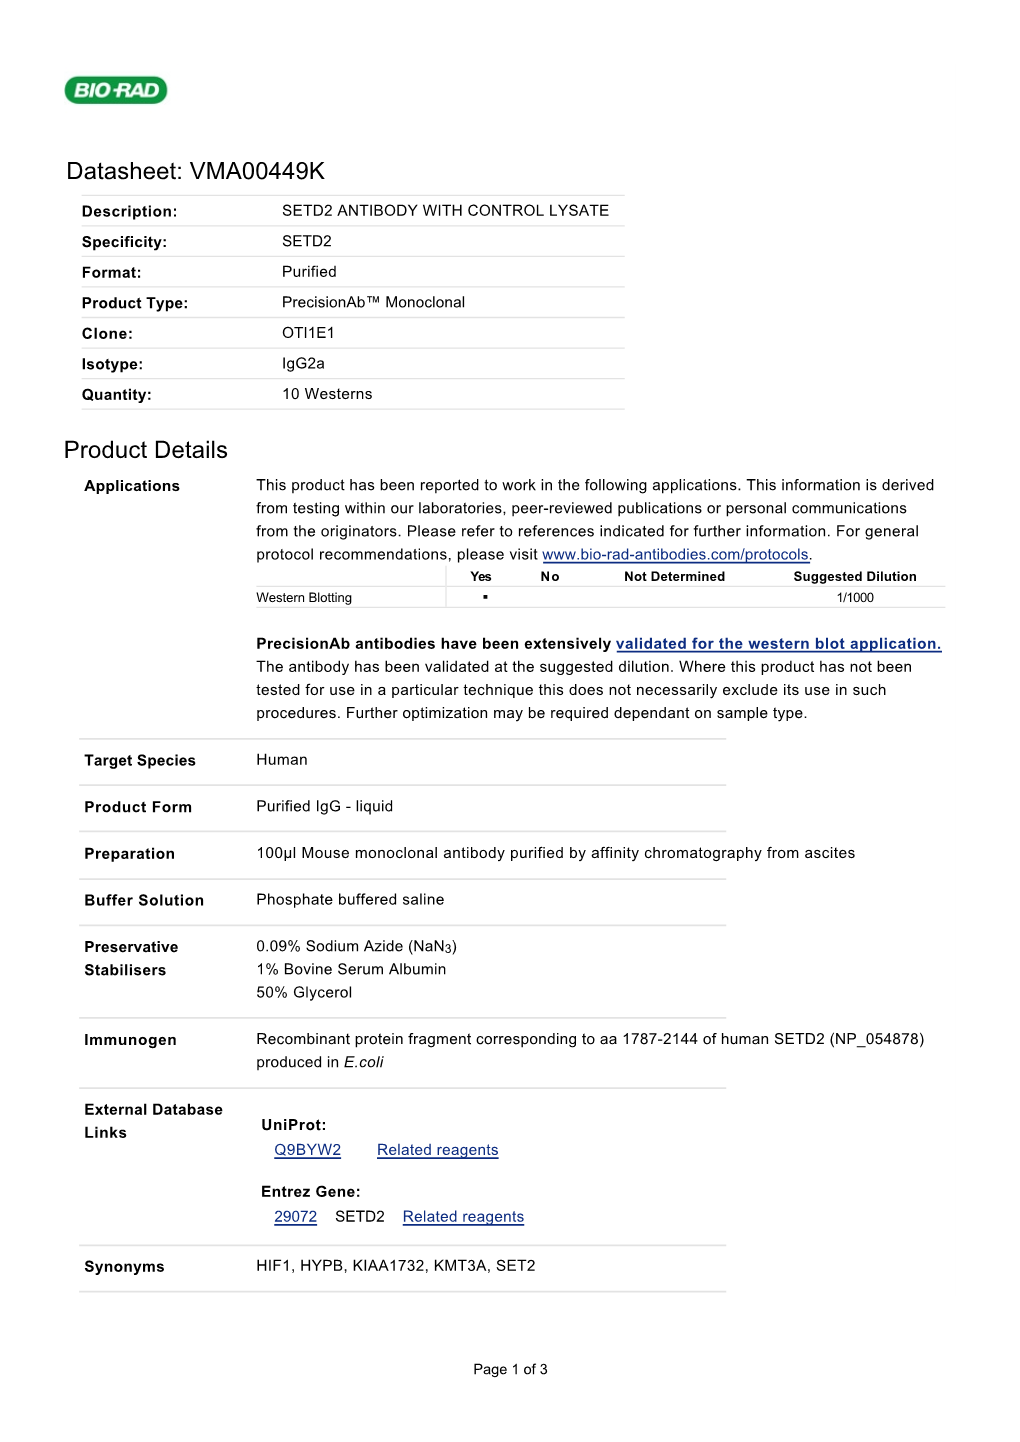 Datasheet: VMA00449K Product Details